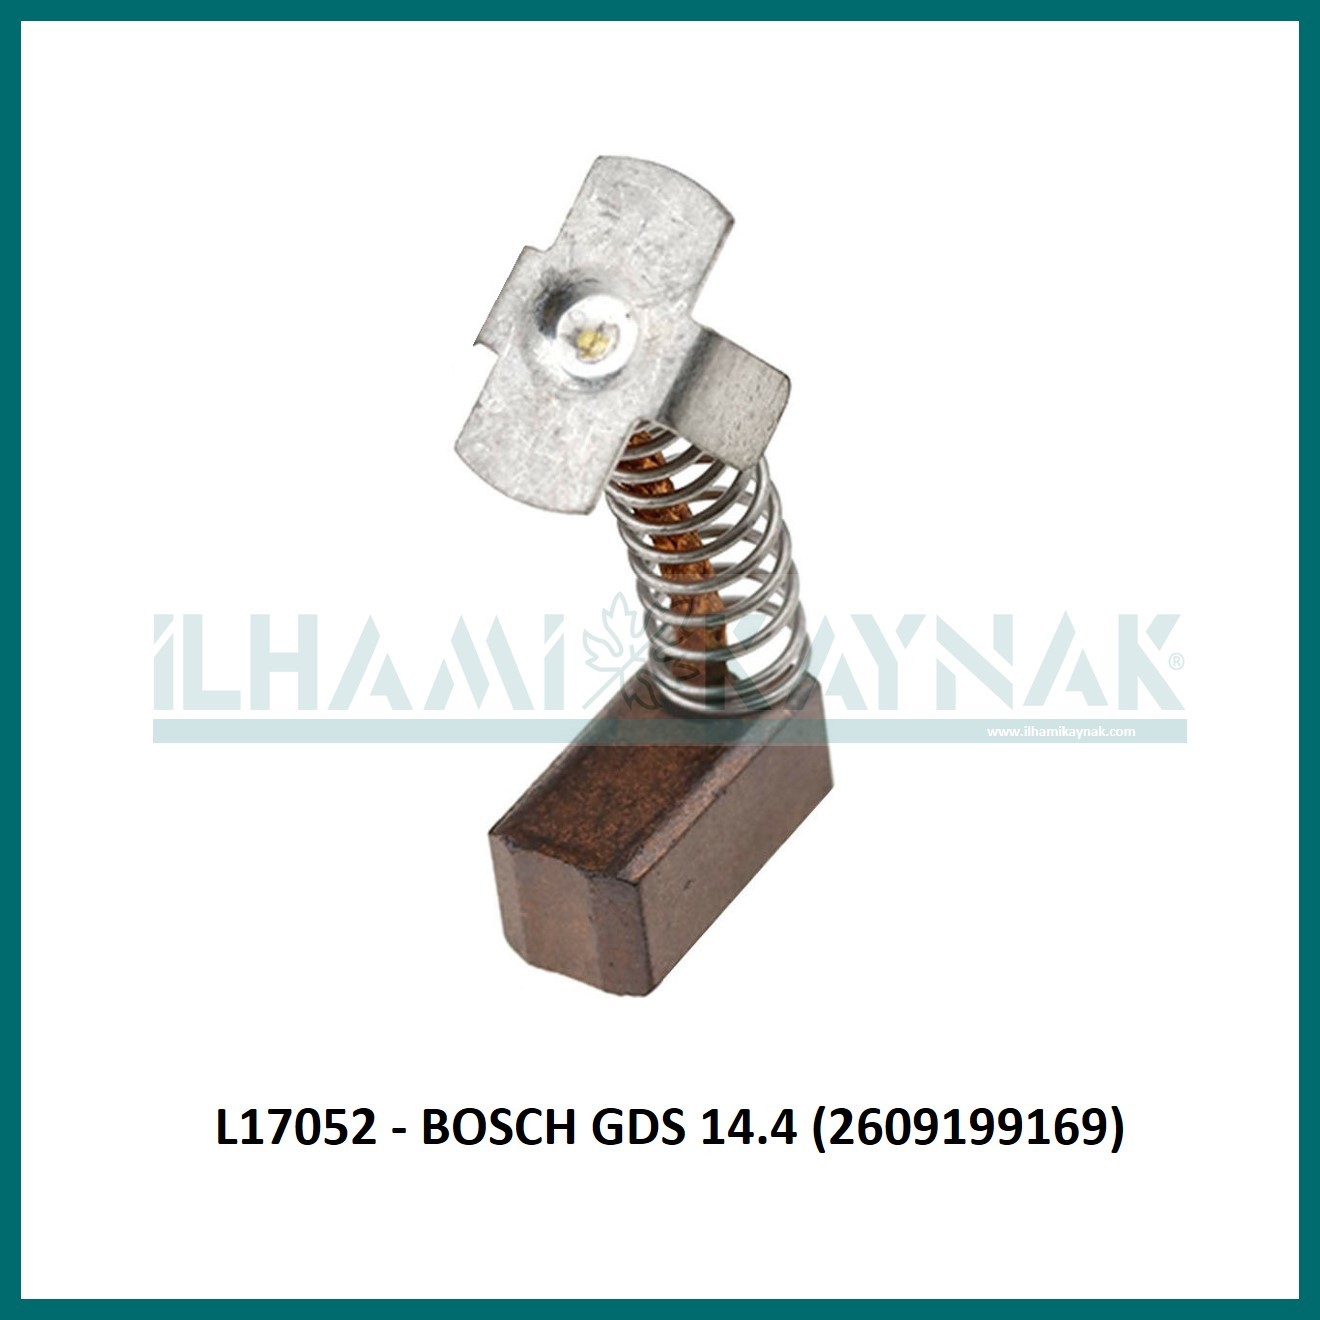 L17052 - BOSCH GDS 14.4 (2609199169) - 5.5*6.1*12 mm - Minimum Satın Alım: 10 Adet